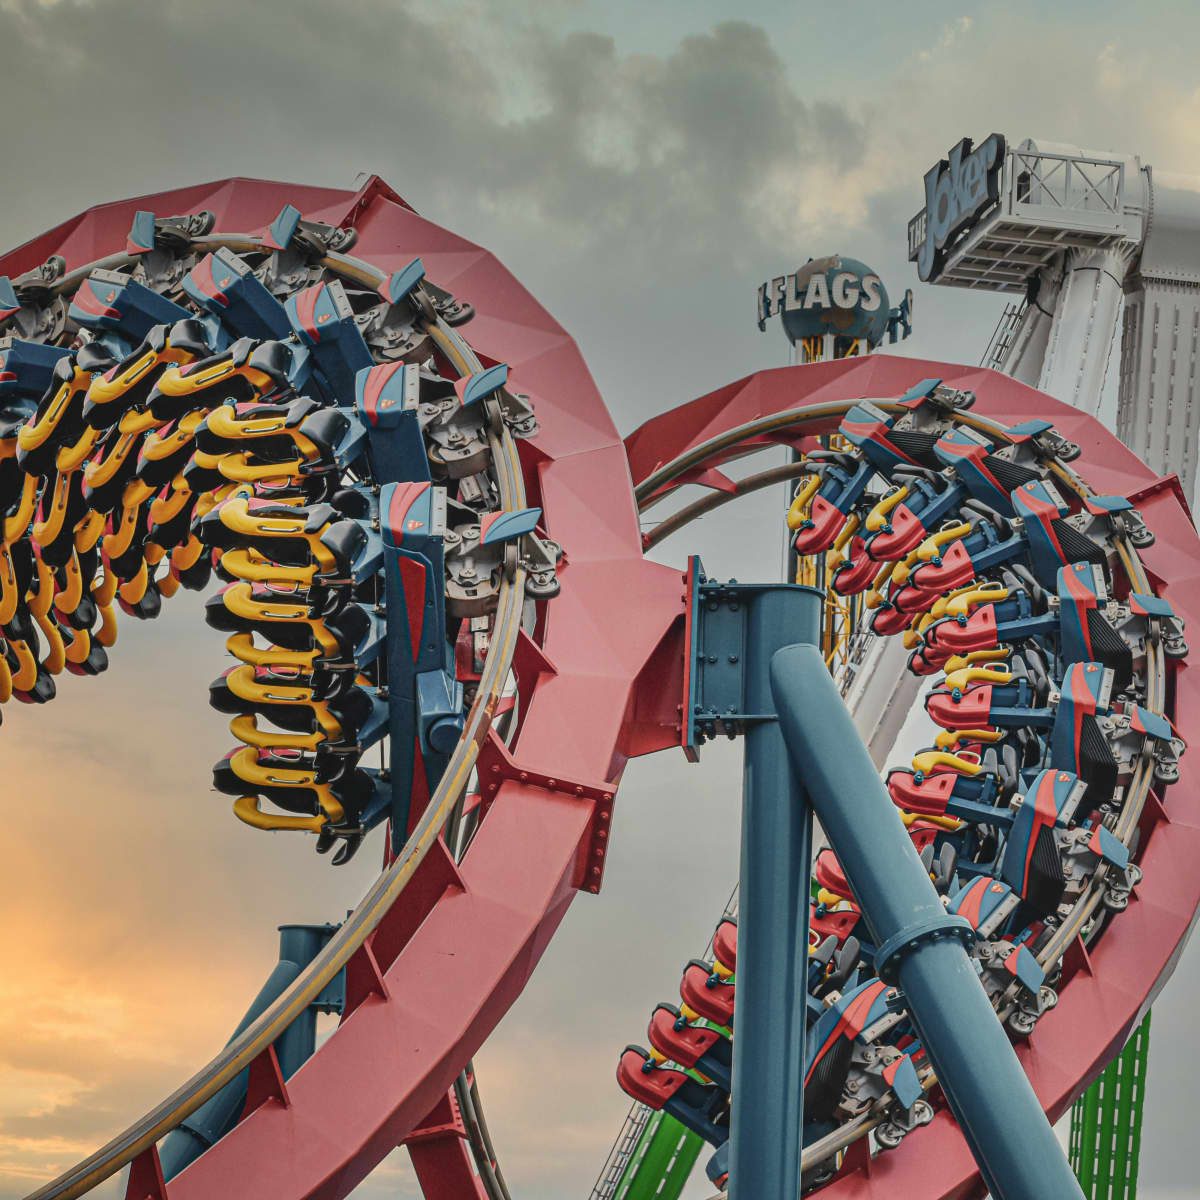 15 Ways to Get Big Apple Coaster Tickets Discounts